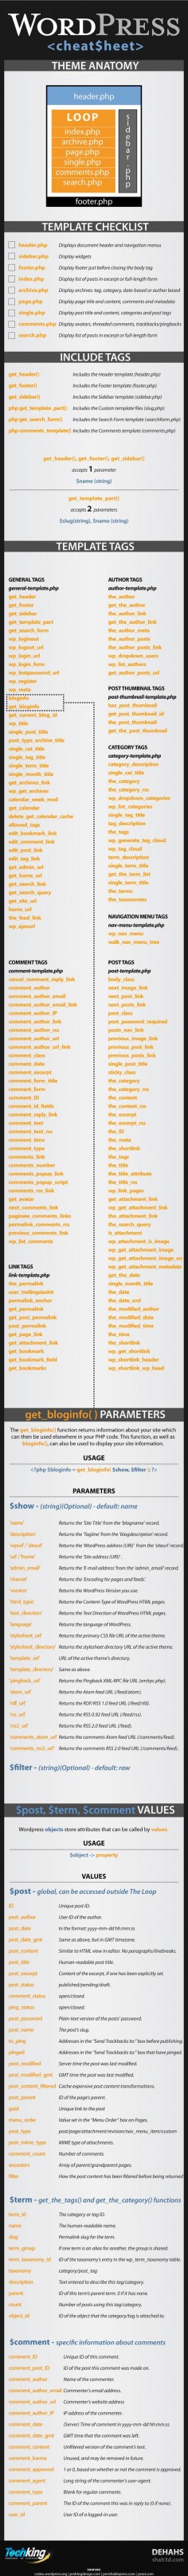 The Ulitmate Wordpress Cheat Sheet for Bloggers!